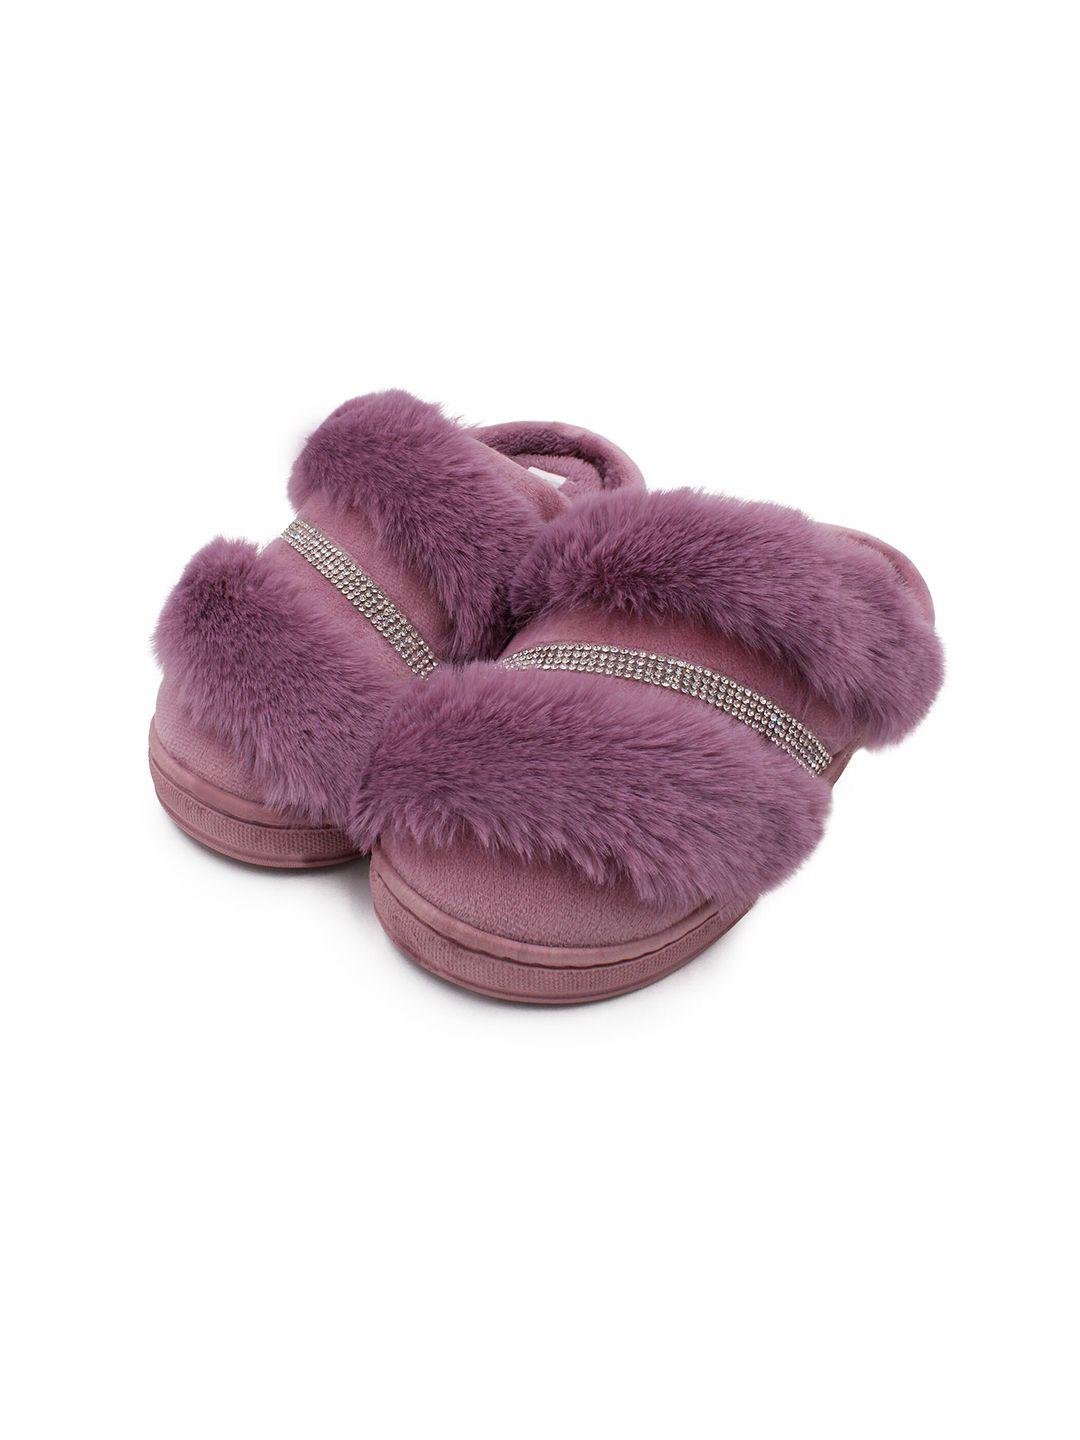 jenna women embellished self design fur warm winter room slippers